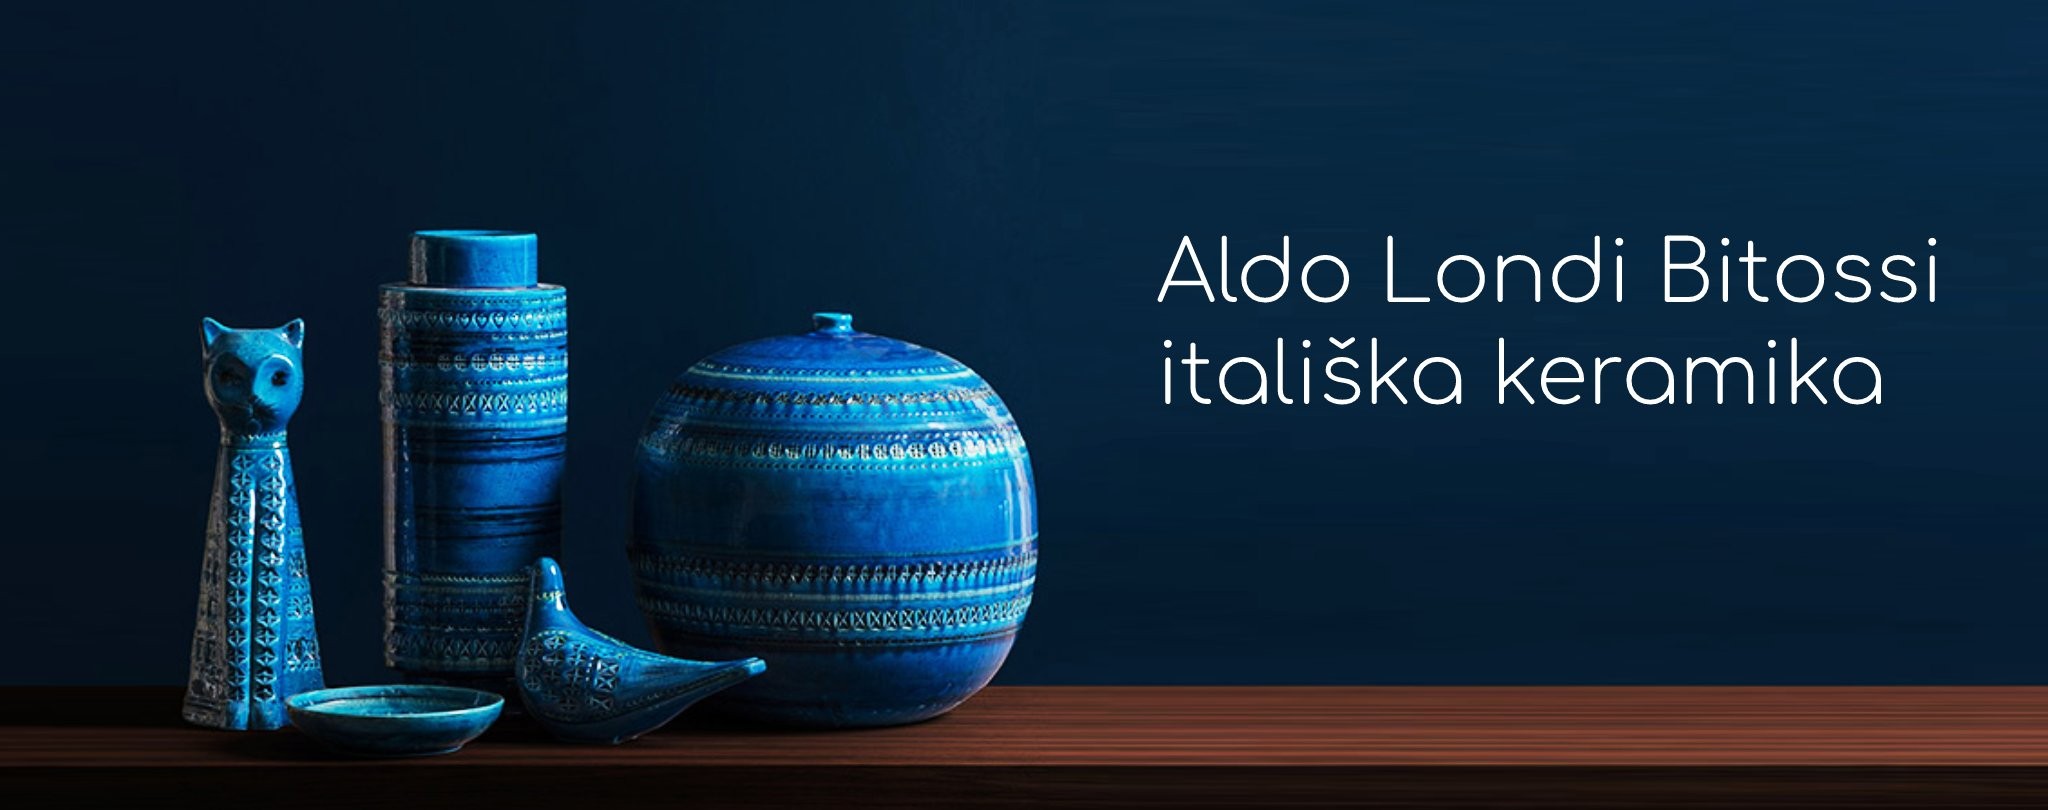 Aldo Londi Bitossi itališka keramika